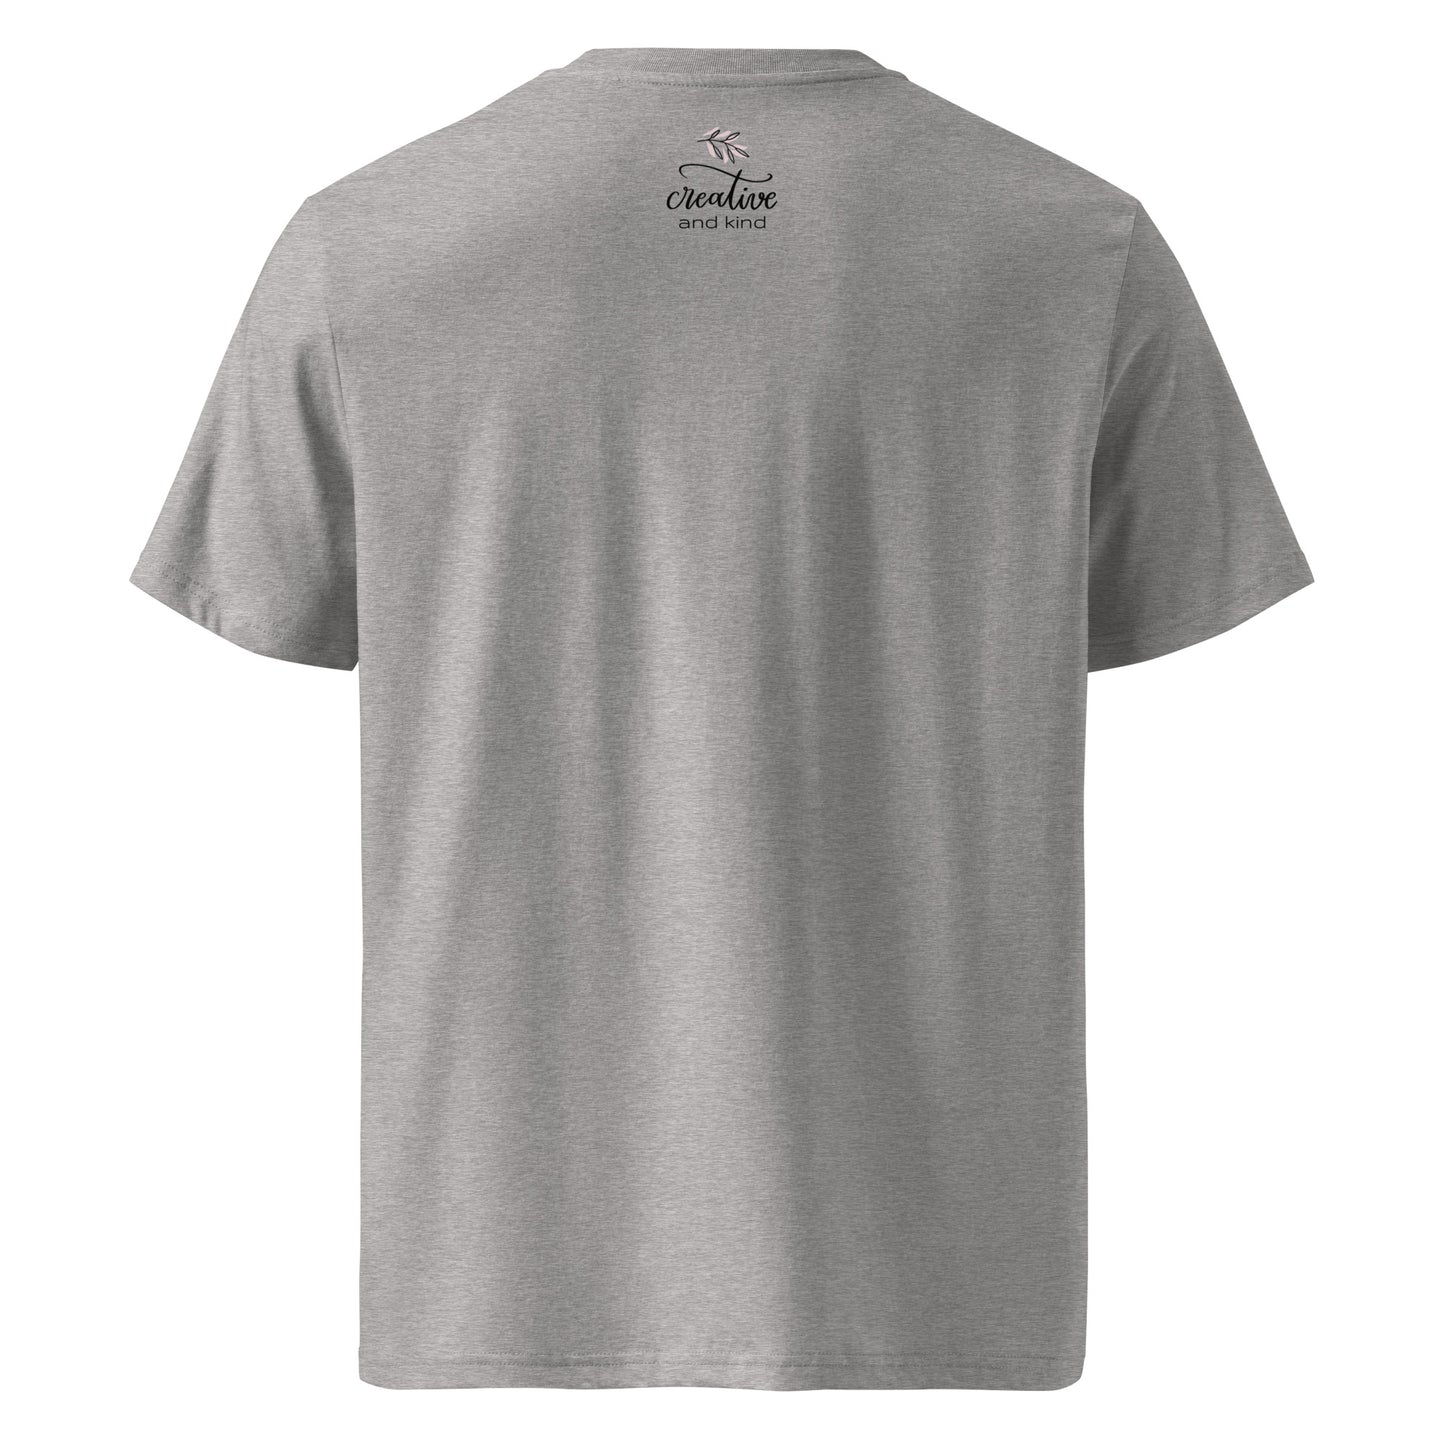 Unisex organic cotton t-shirt "Focus on the good stuff"